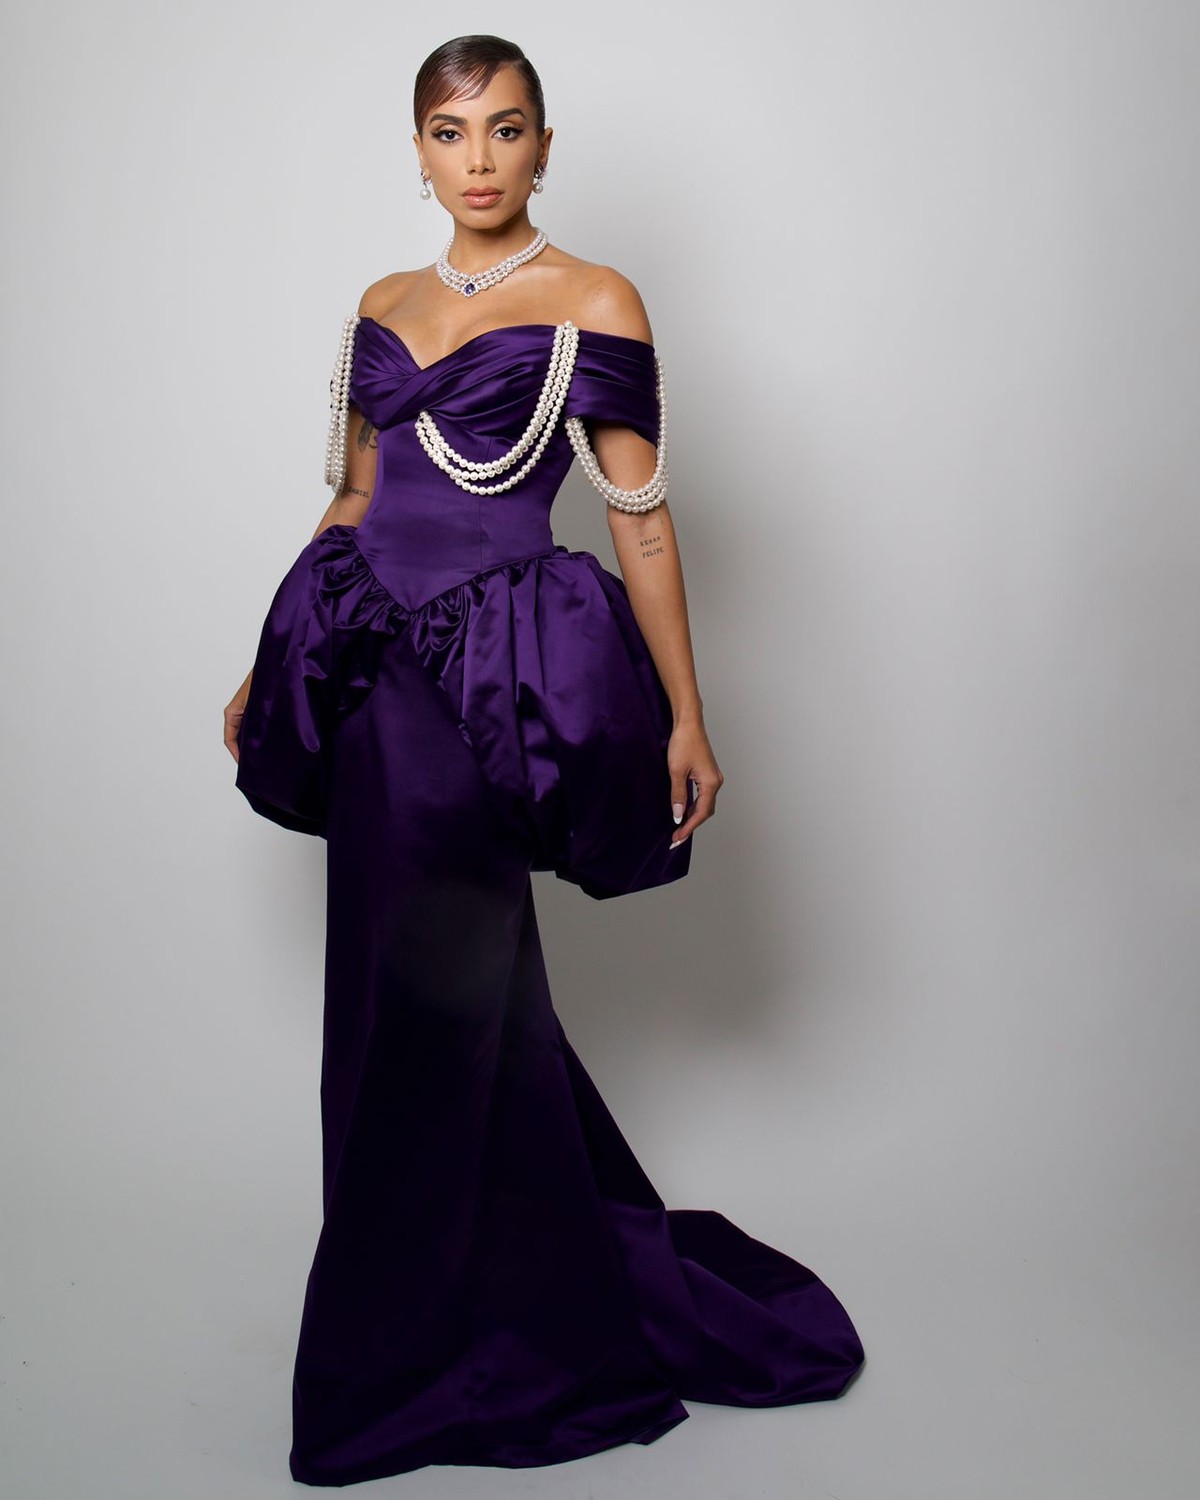 Anitta no Met Gala 2022: veja o glance da cantora |  Moda e beleza